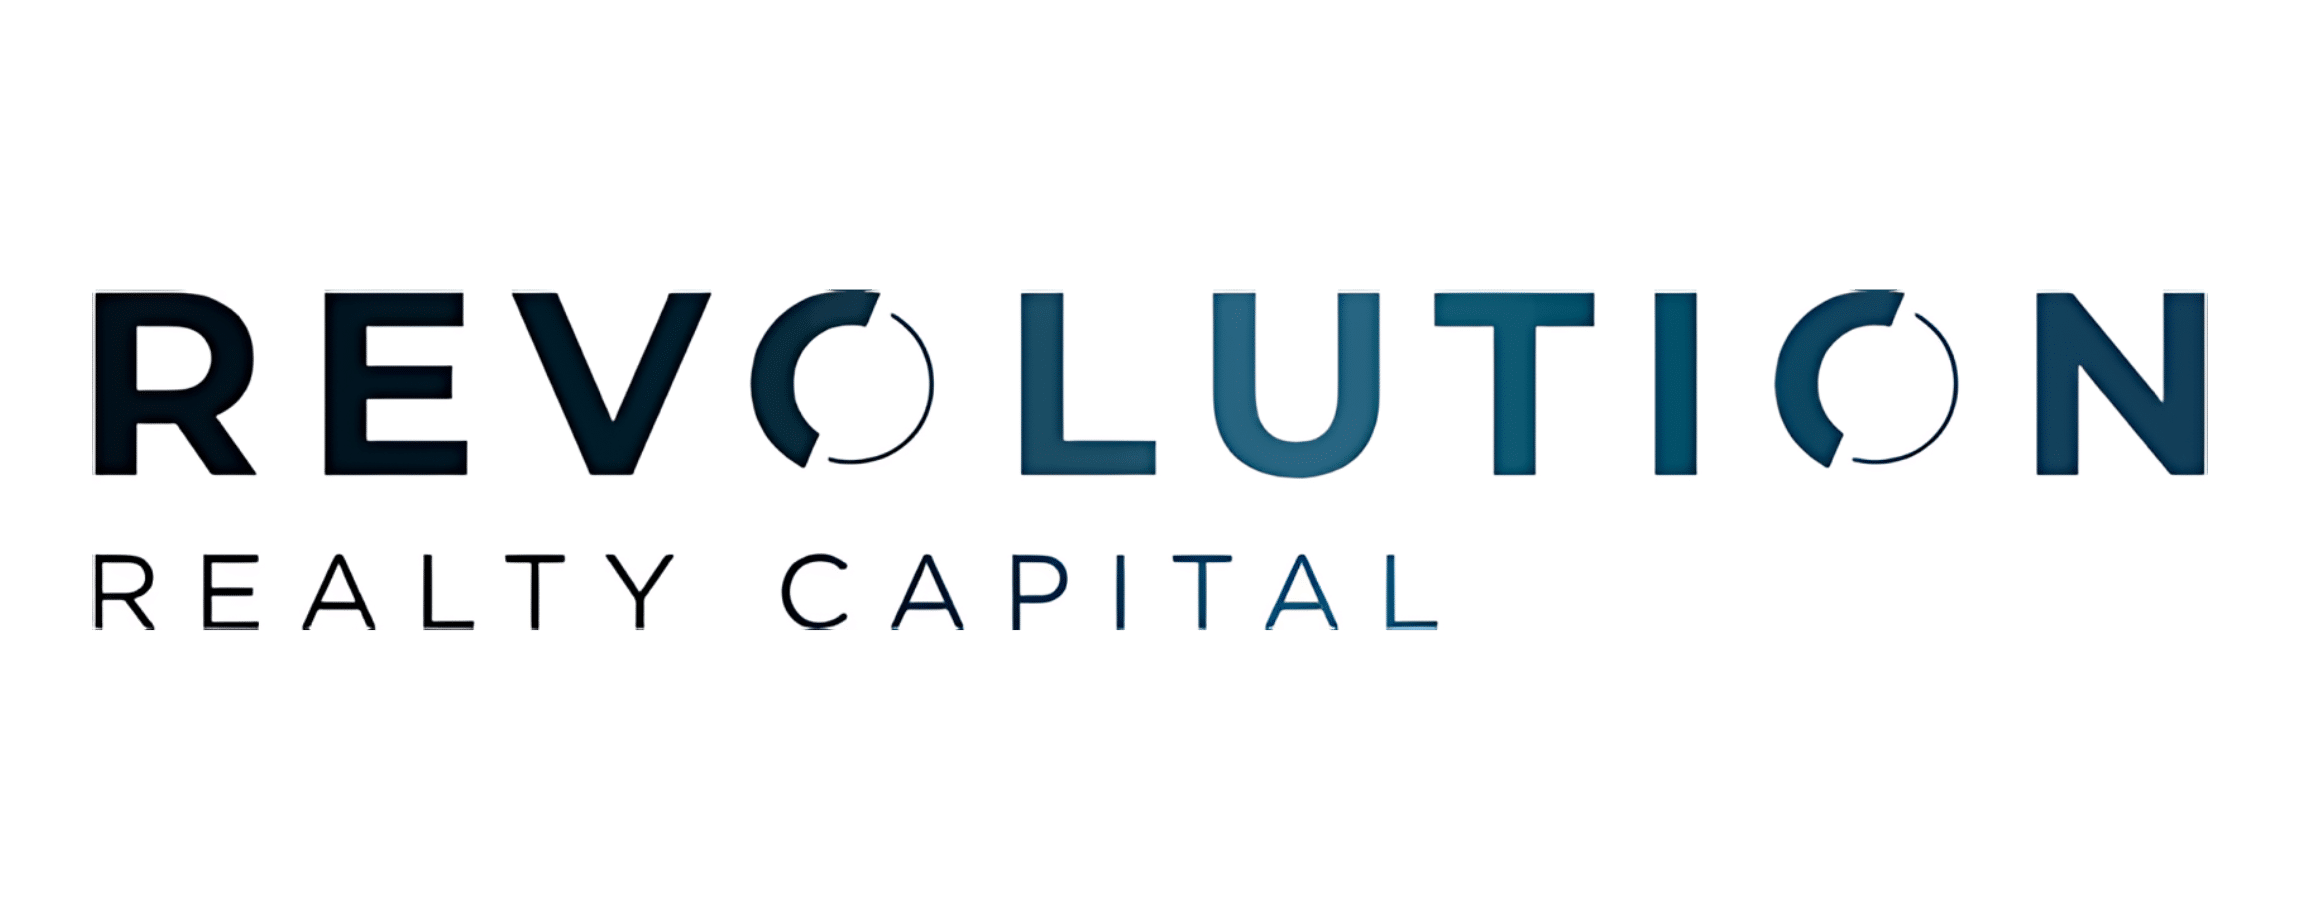 Revolution Realty Capital